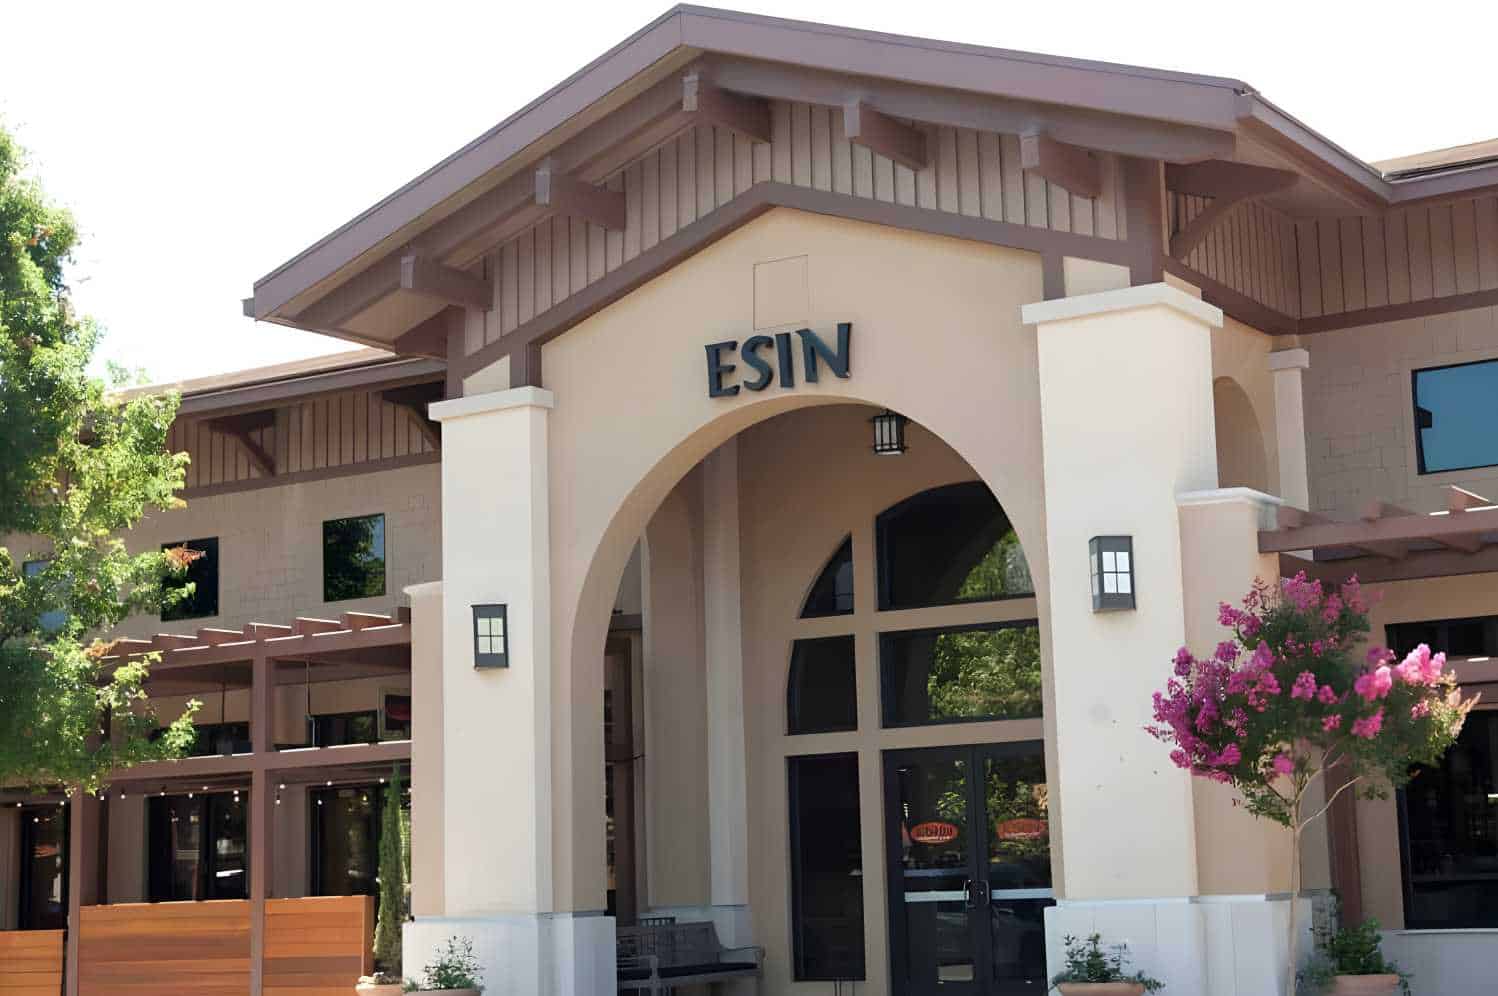 Esin Restaurant & Bar Best Restaurants in Danville, CA